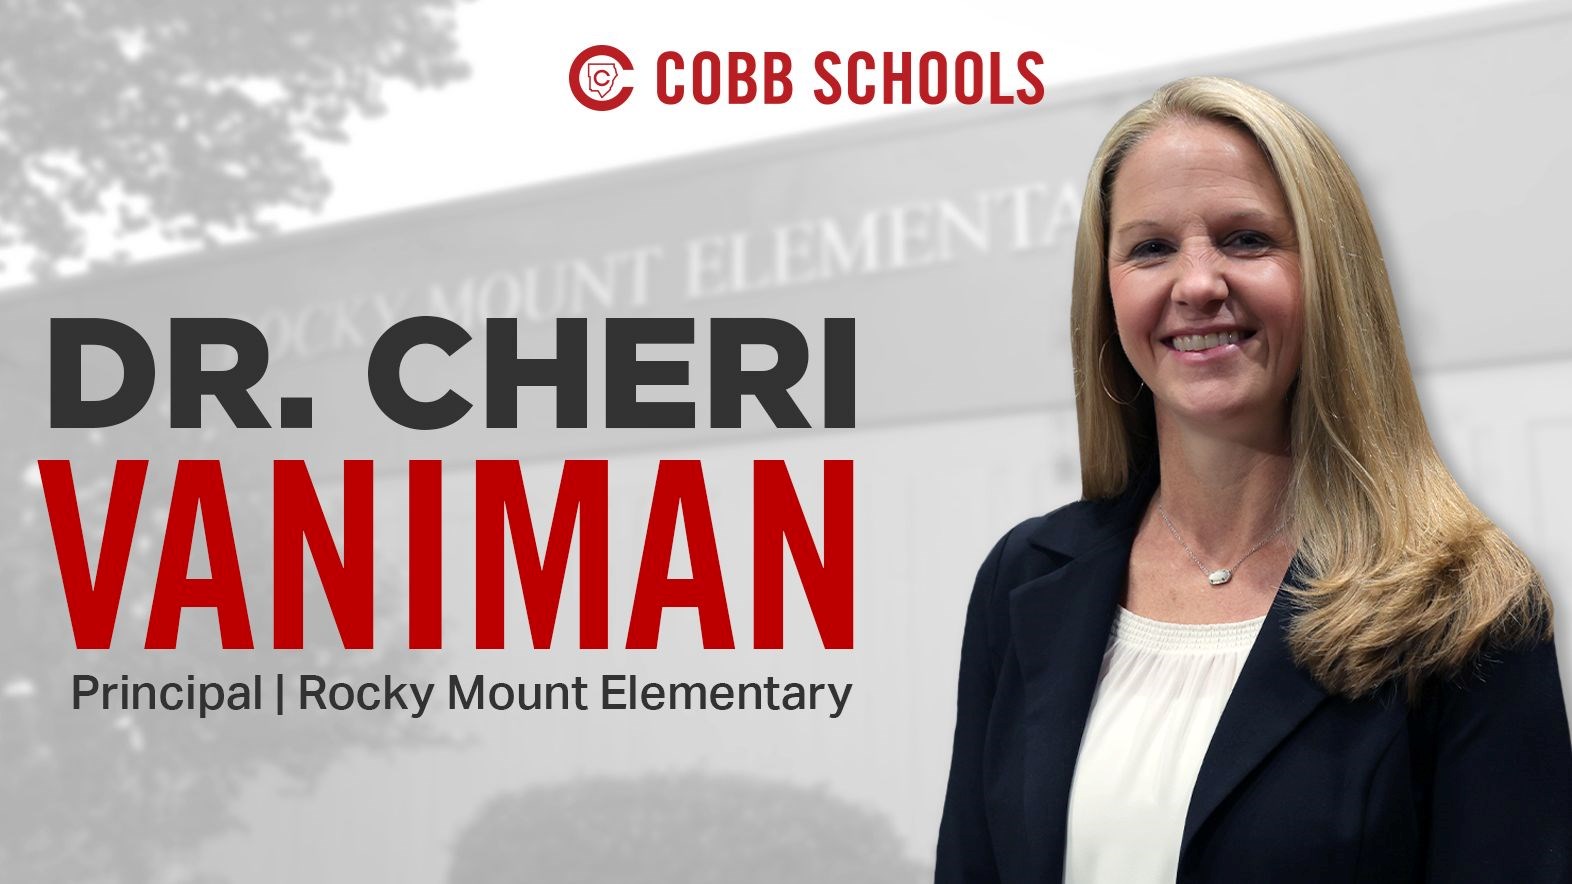 Dr. Cheri Vaniman was named principal of Rocky Mount Elementary School.